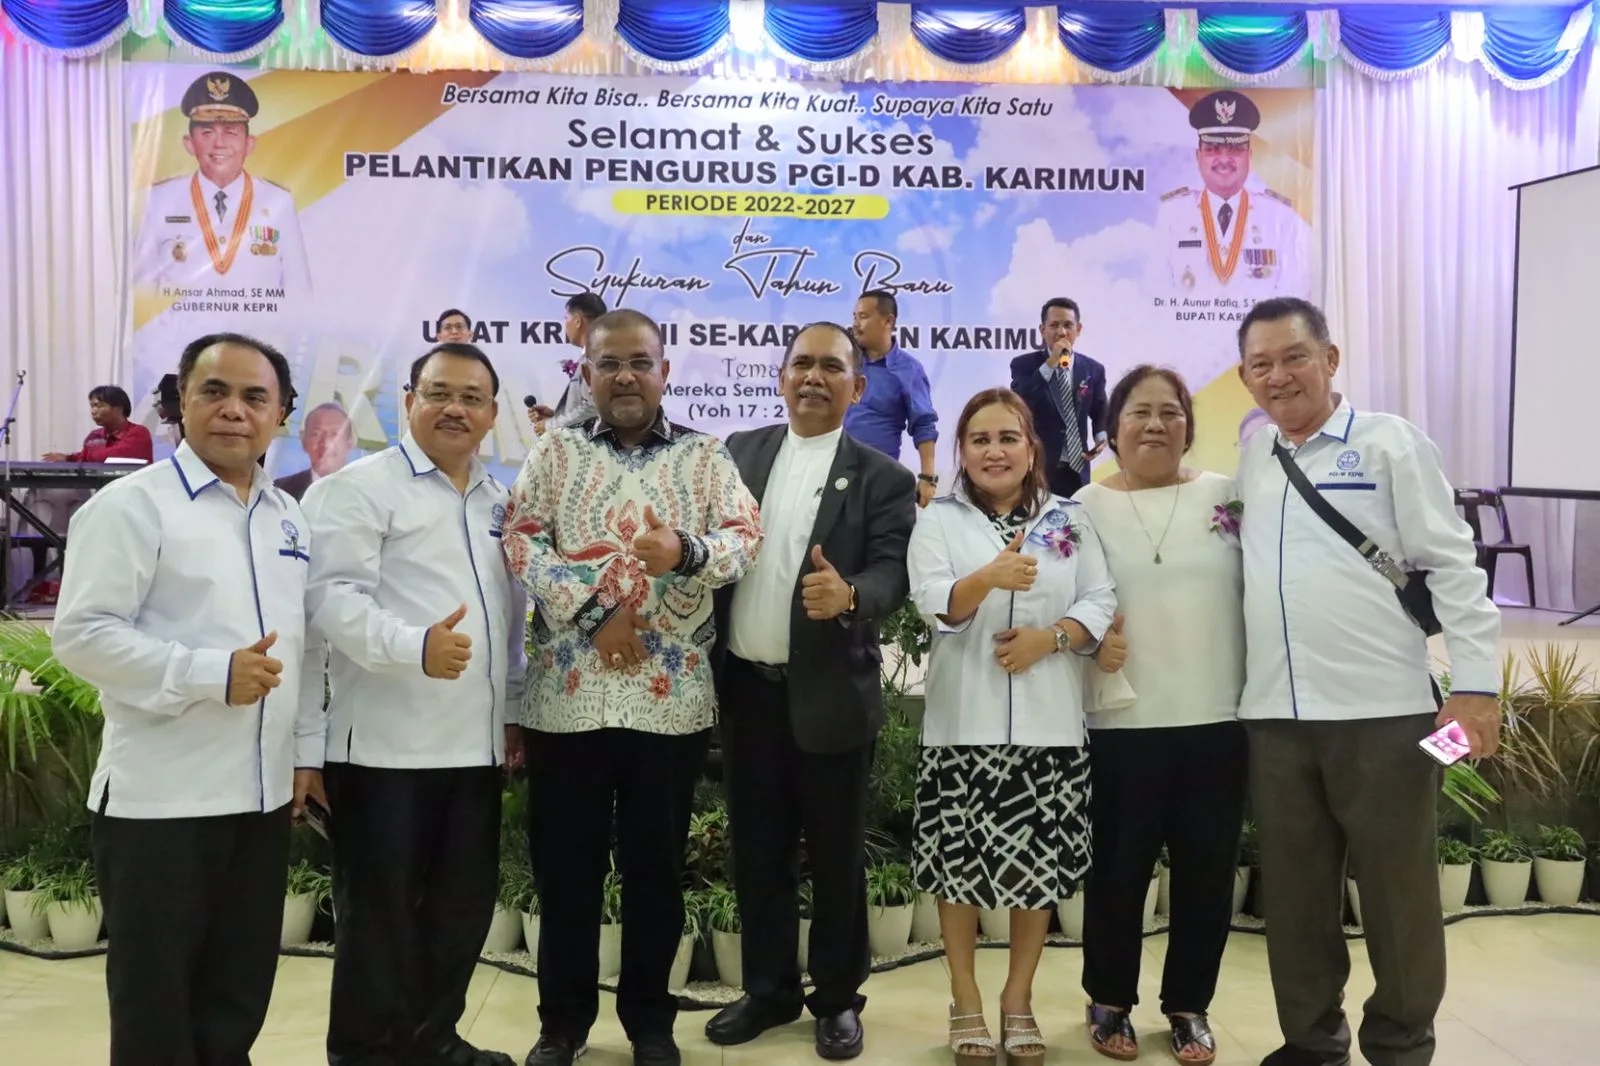 Pelantikan Pengurus Persatuan Gereja Indonesia Daerah Karimun